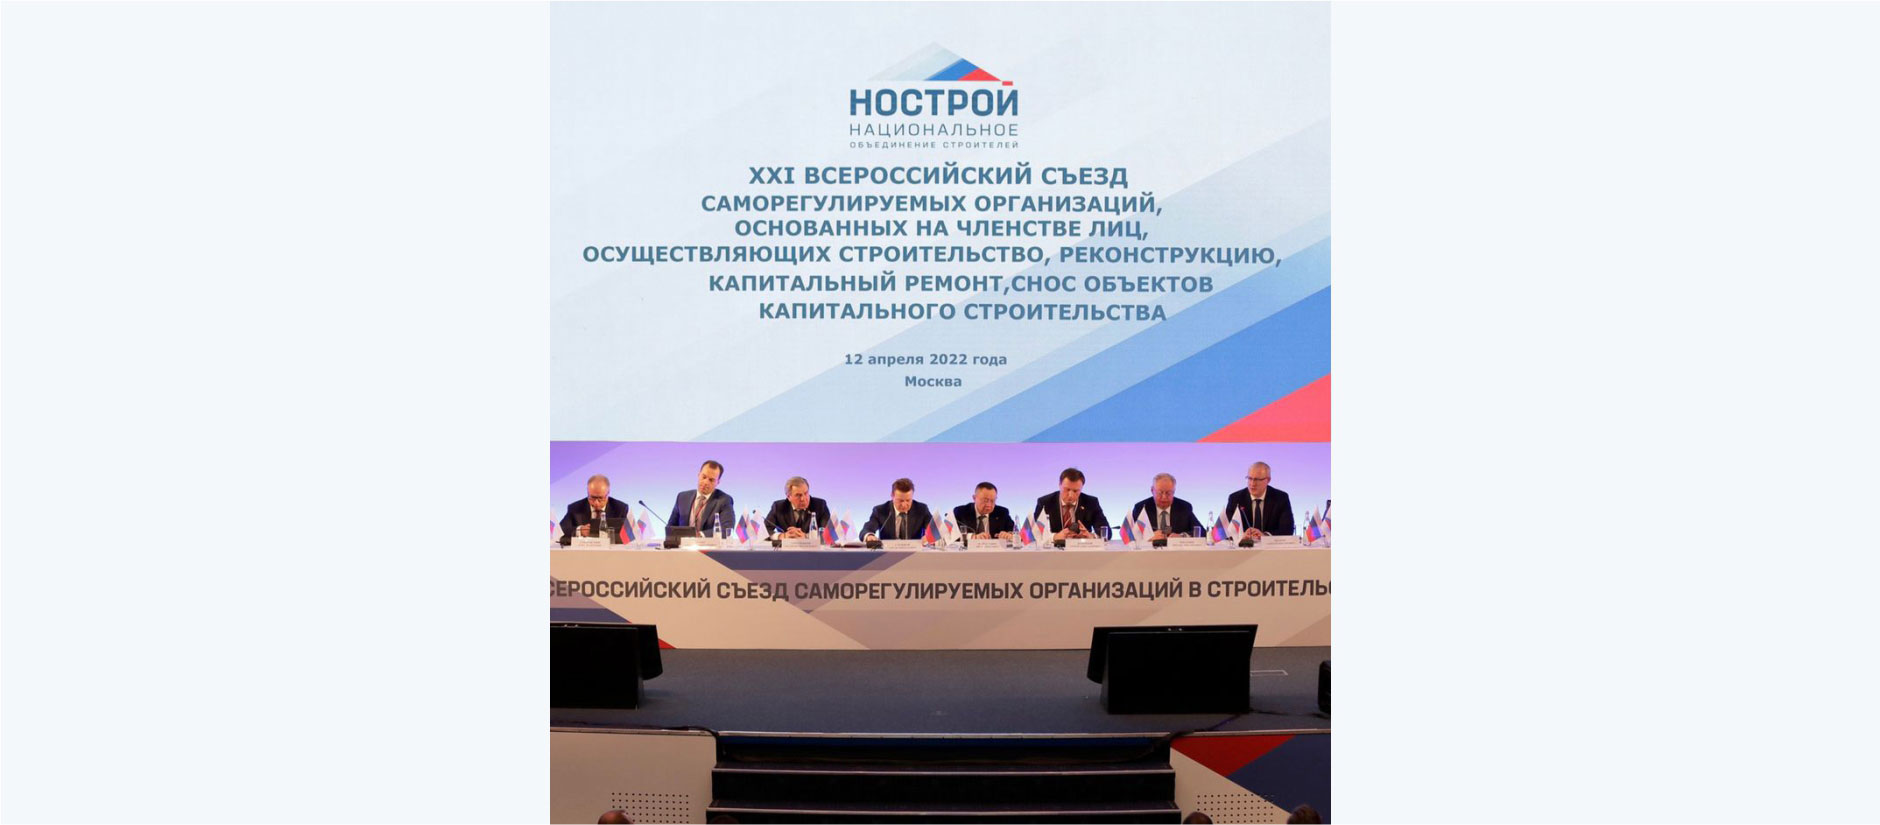 Vladimir Noarov, General Director of NNIAT LLC, took part in the XXI All-Russian Congress of self-regulating construction organizations